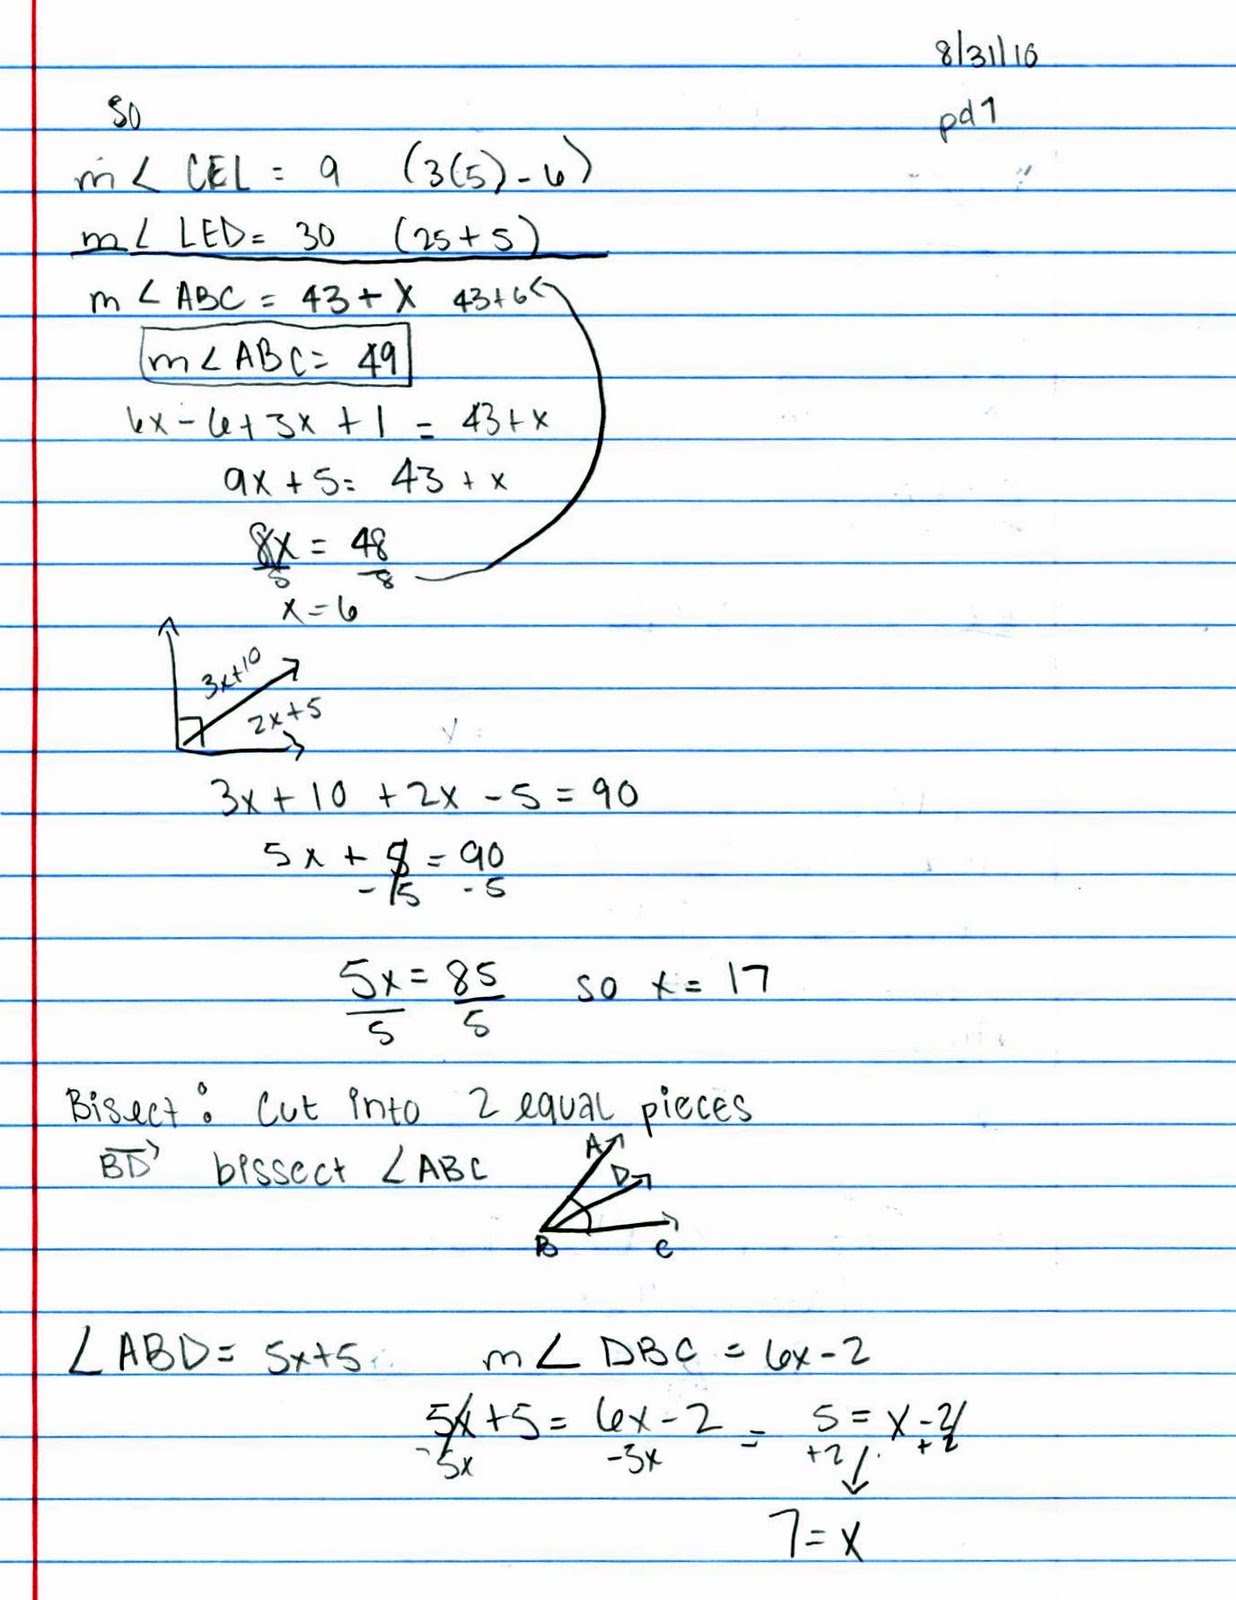 Mr. Ryals' Math Blog 2011: 1.2 Segment and Angle Addition Postulates